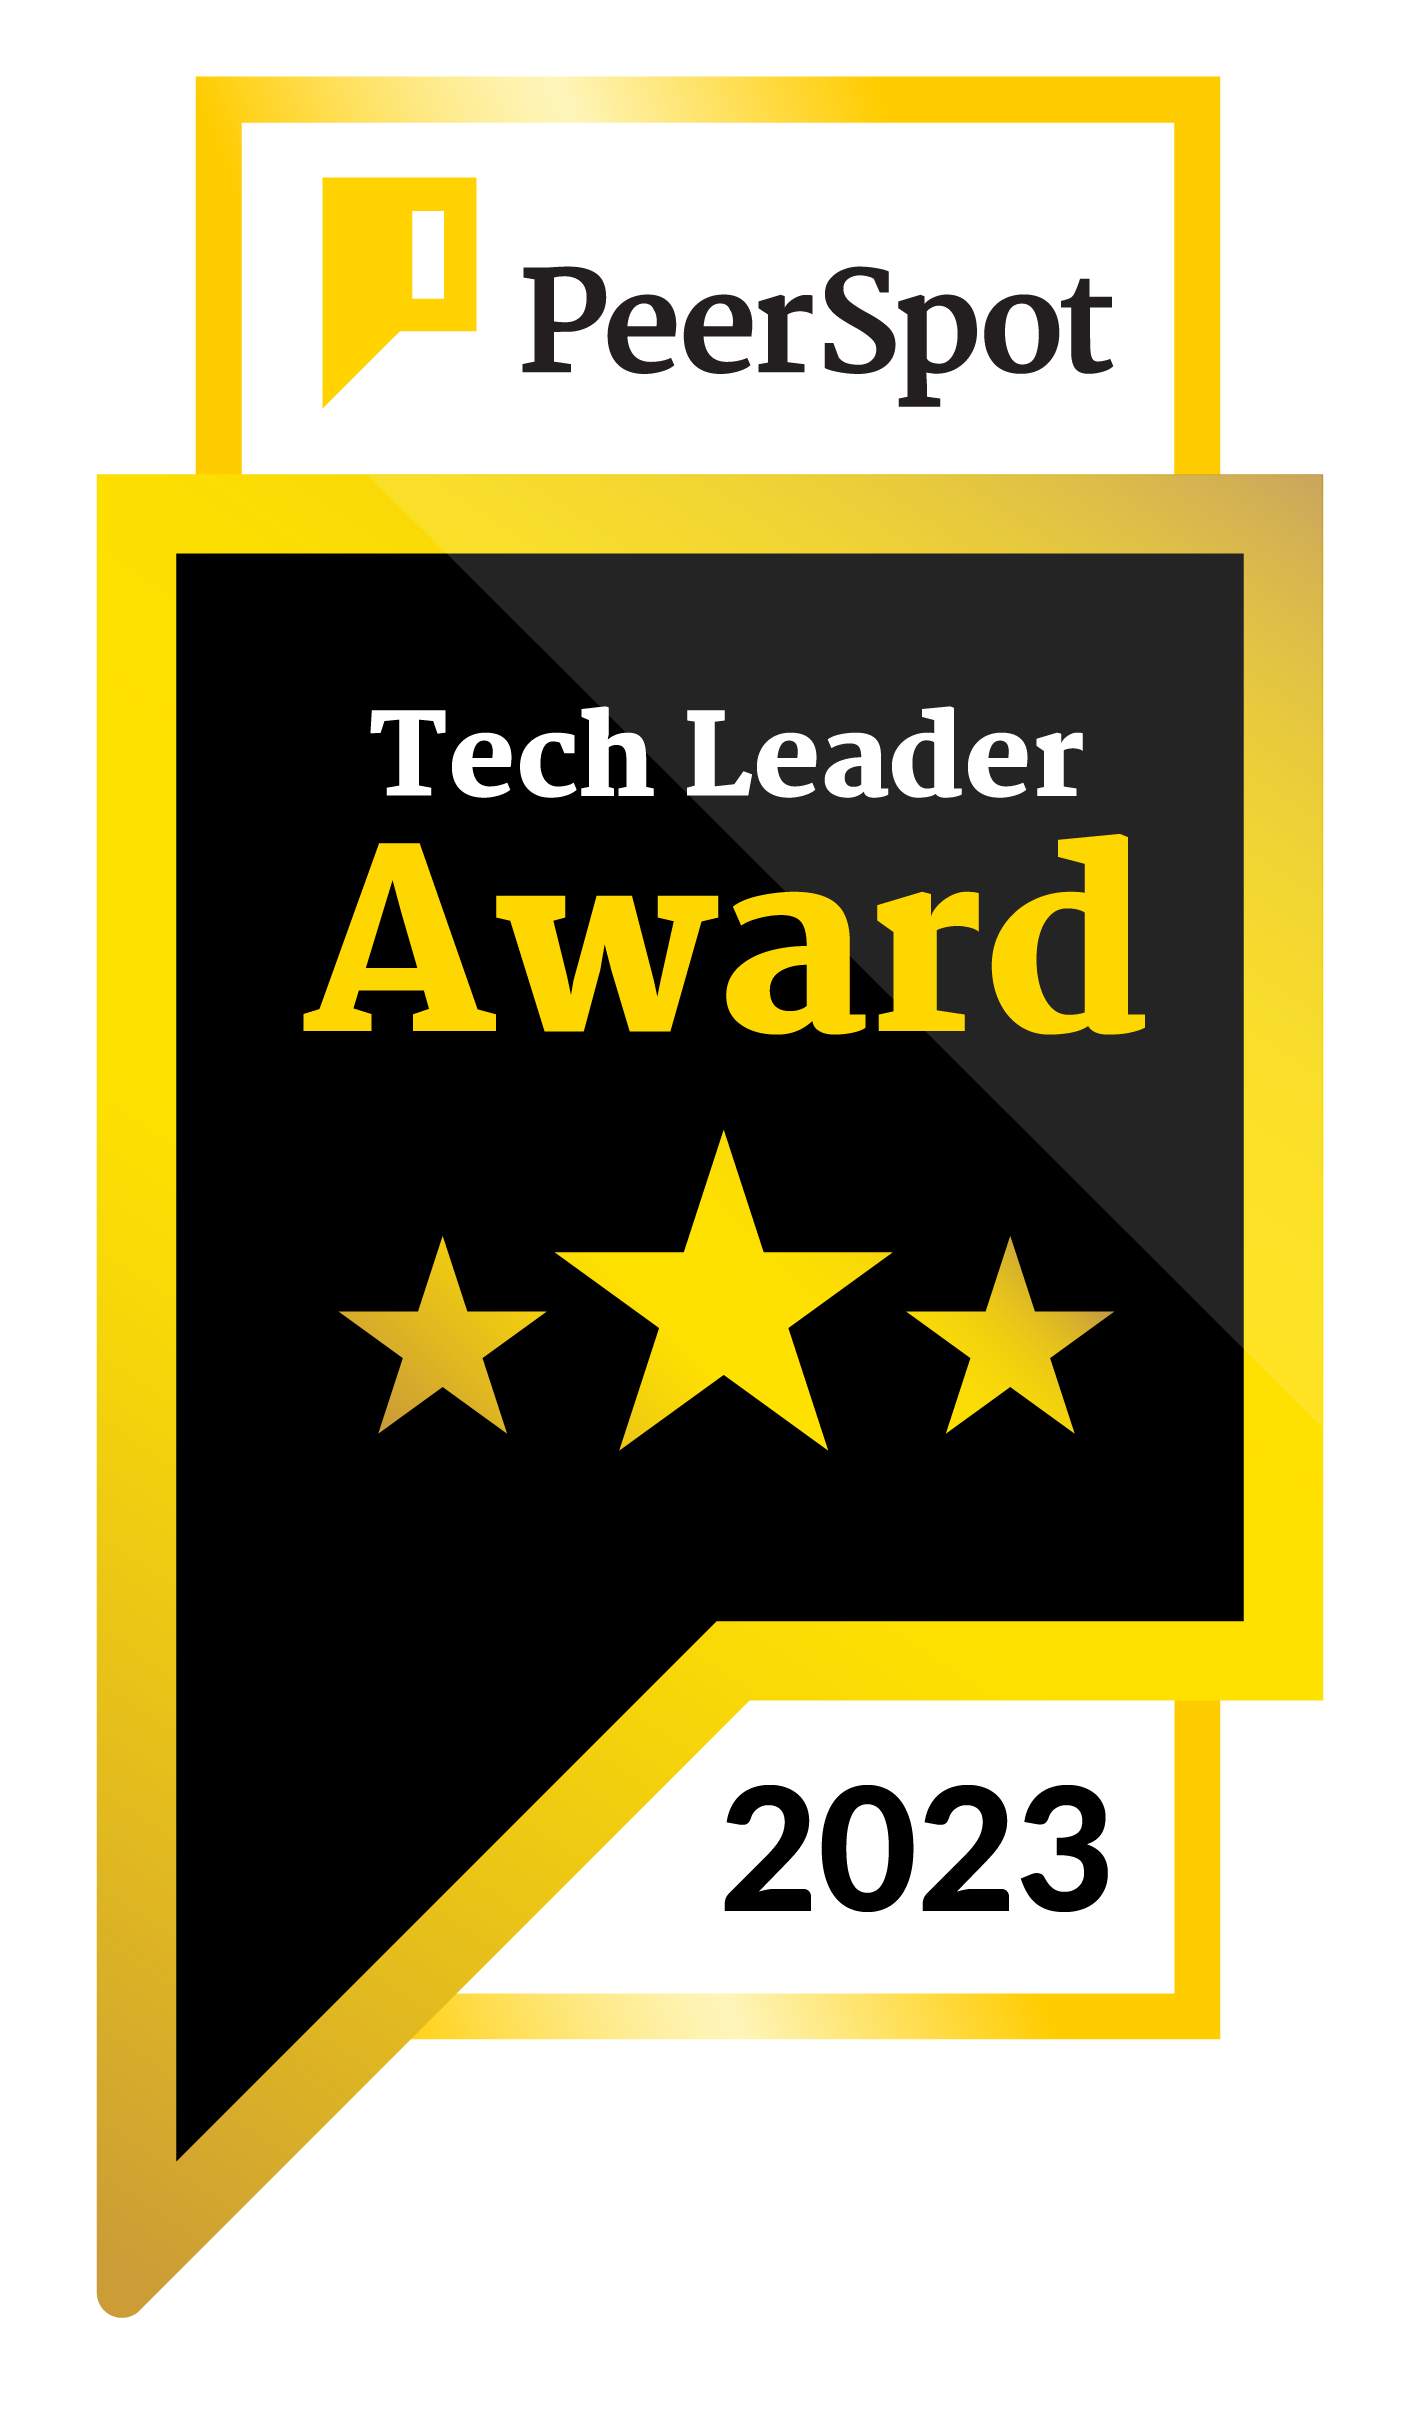 PeerSpotの2023年Tech Leader賞